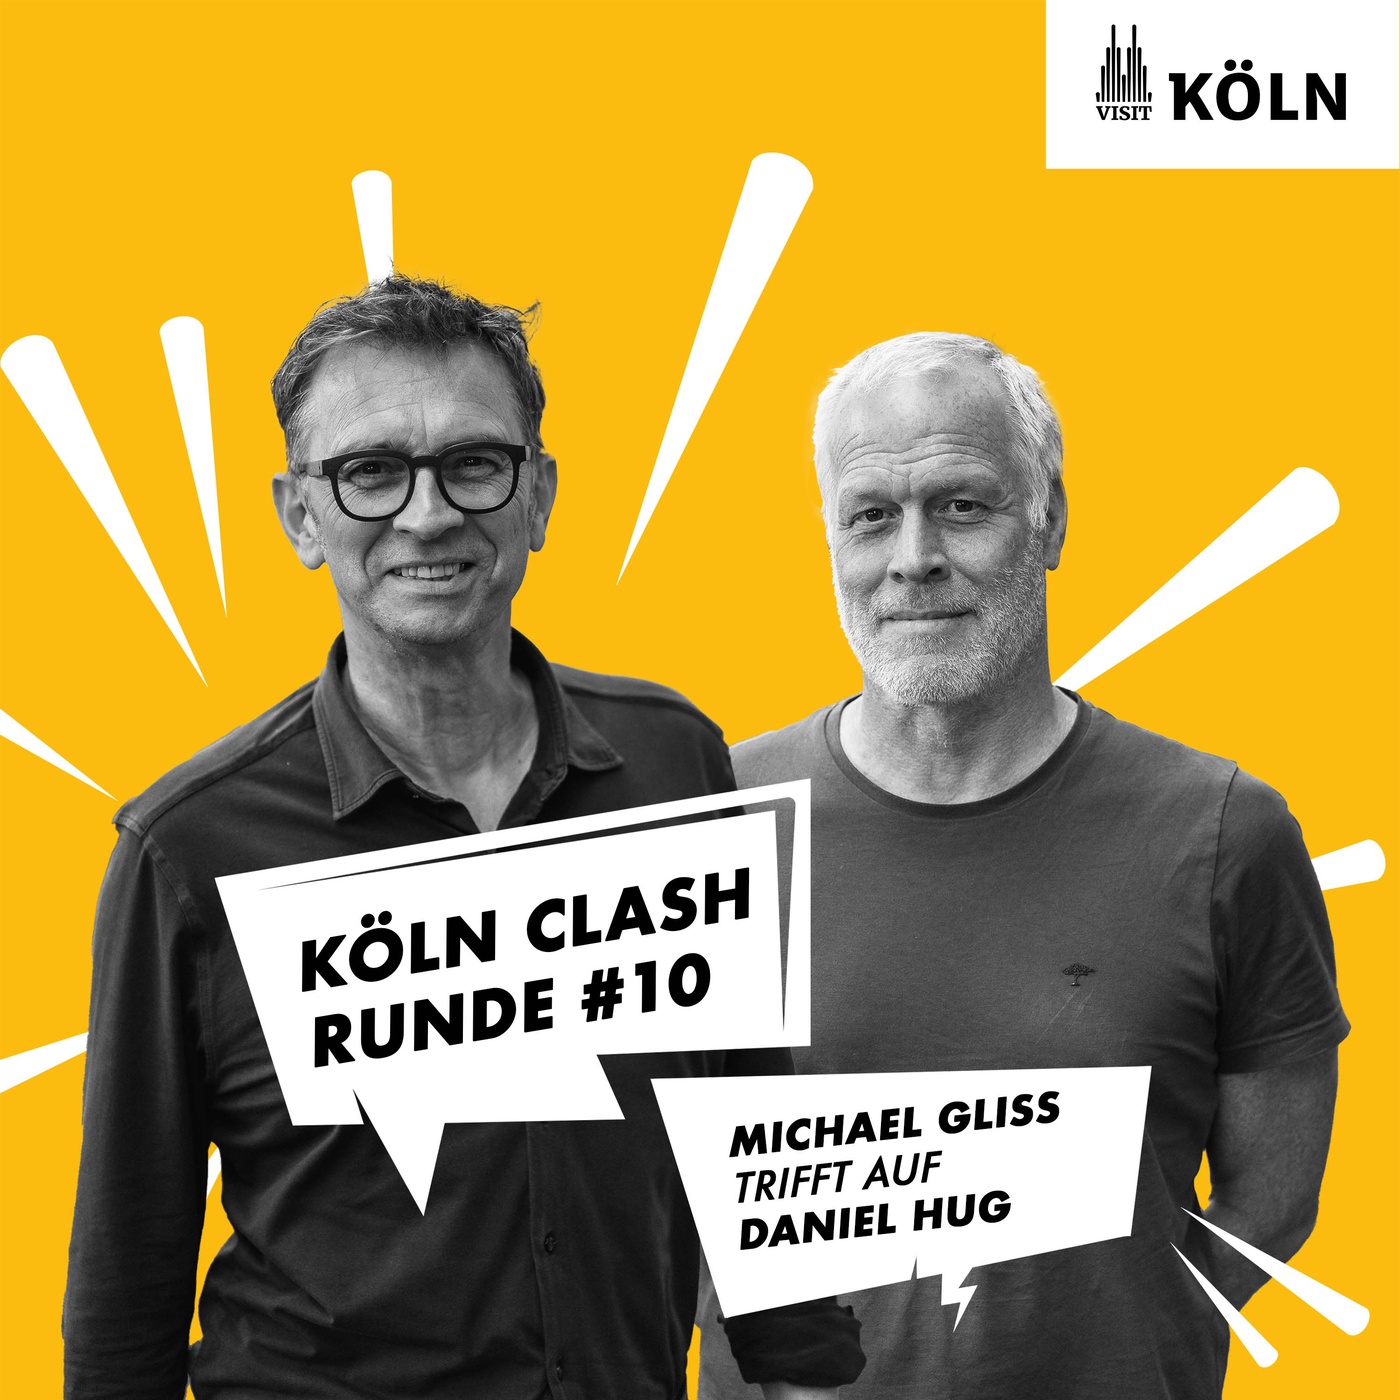 Köln Clash, Runde #10 - Michael Gliss trifft auf Daniel Hug